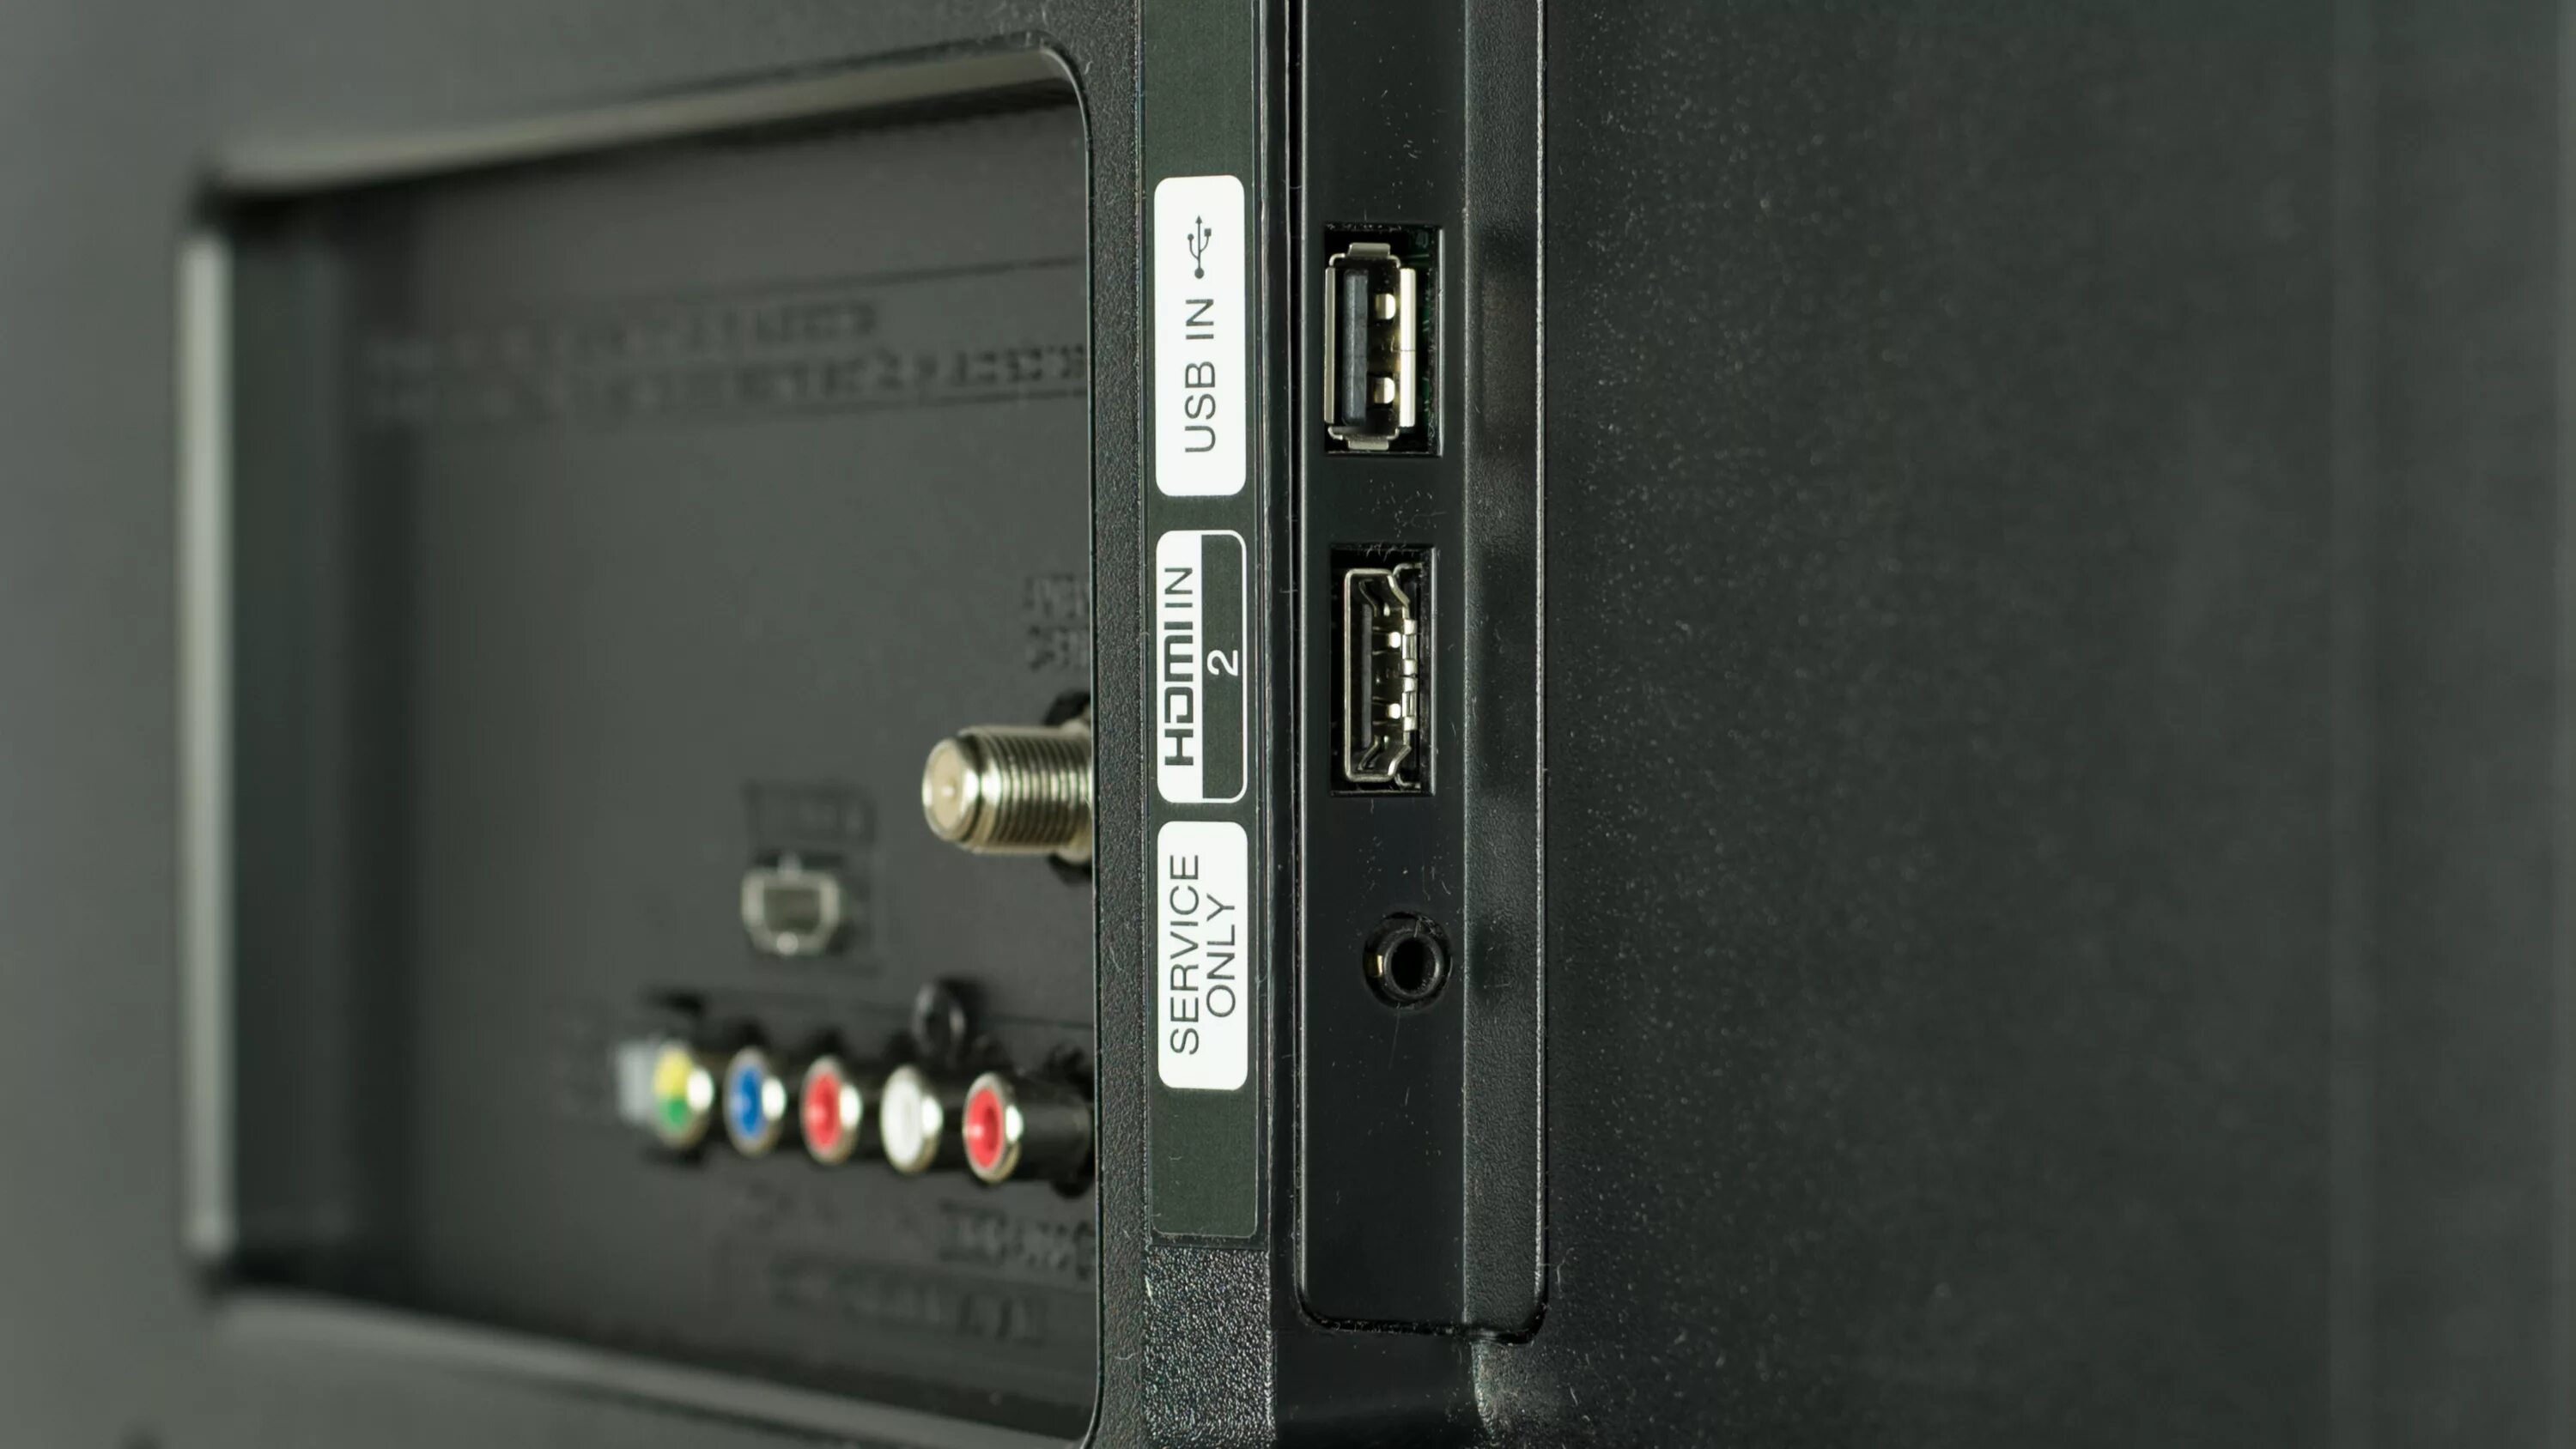 LG 32 разъемы HDMI. Телевизор самсунг смарт разъемы HDMI. Телевизор LG 32 дюйма разъёмы HDMI. Телевизор LG 32lk330 HDMI.